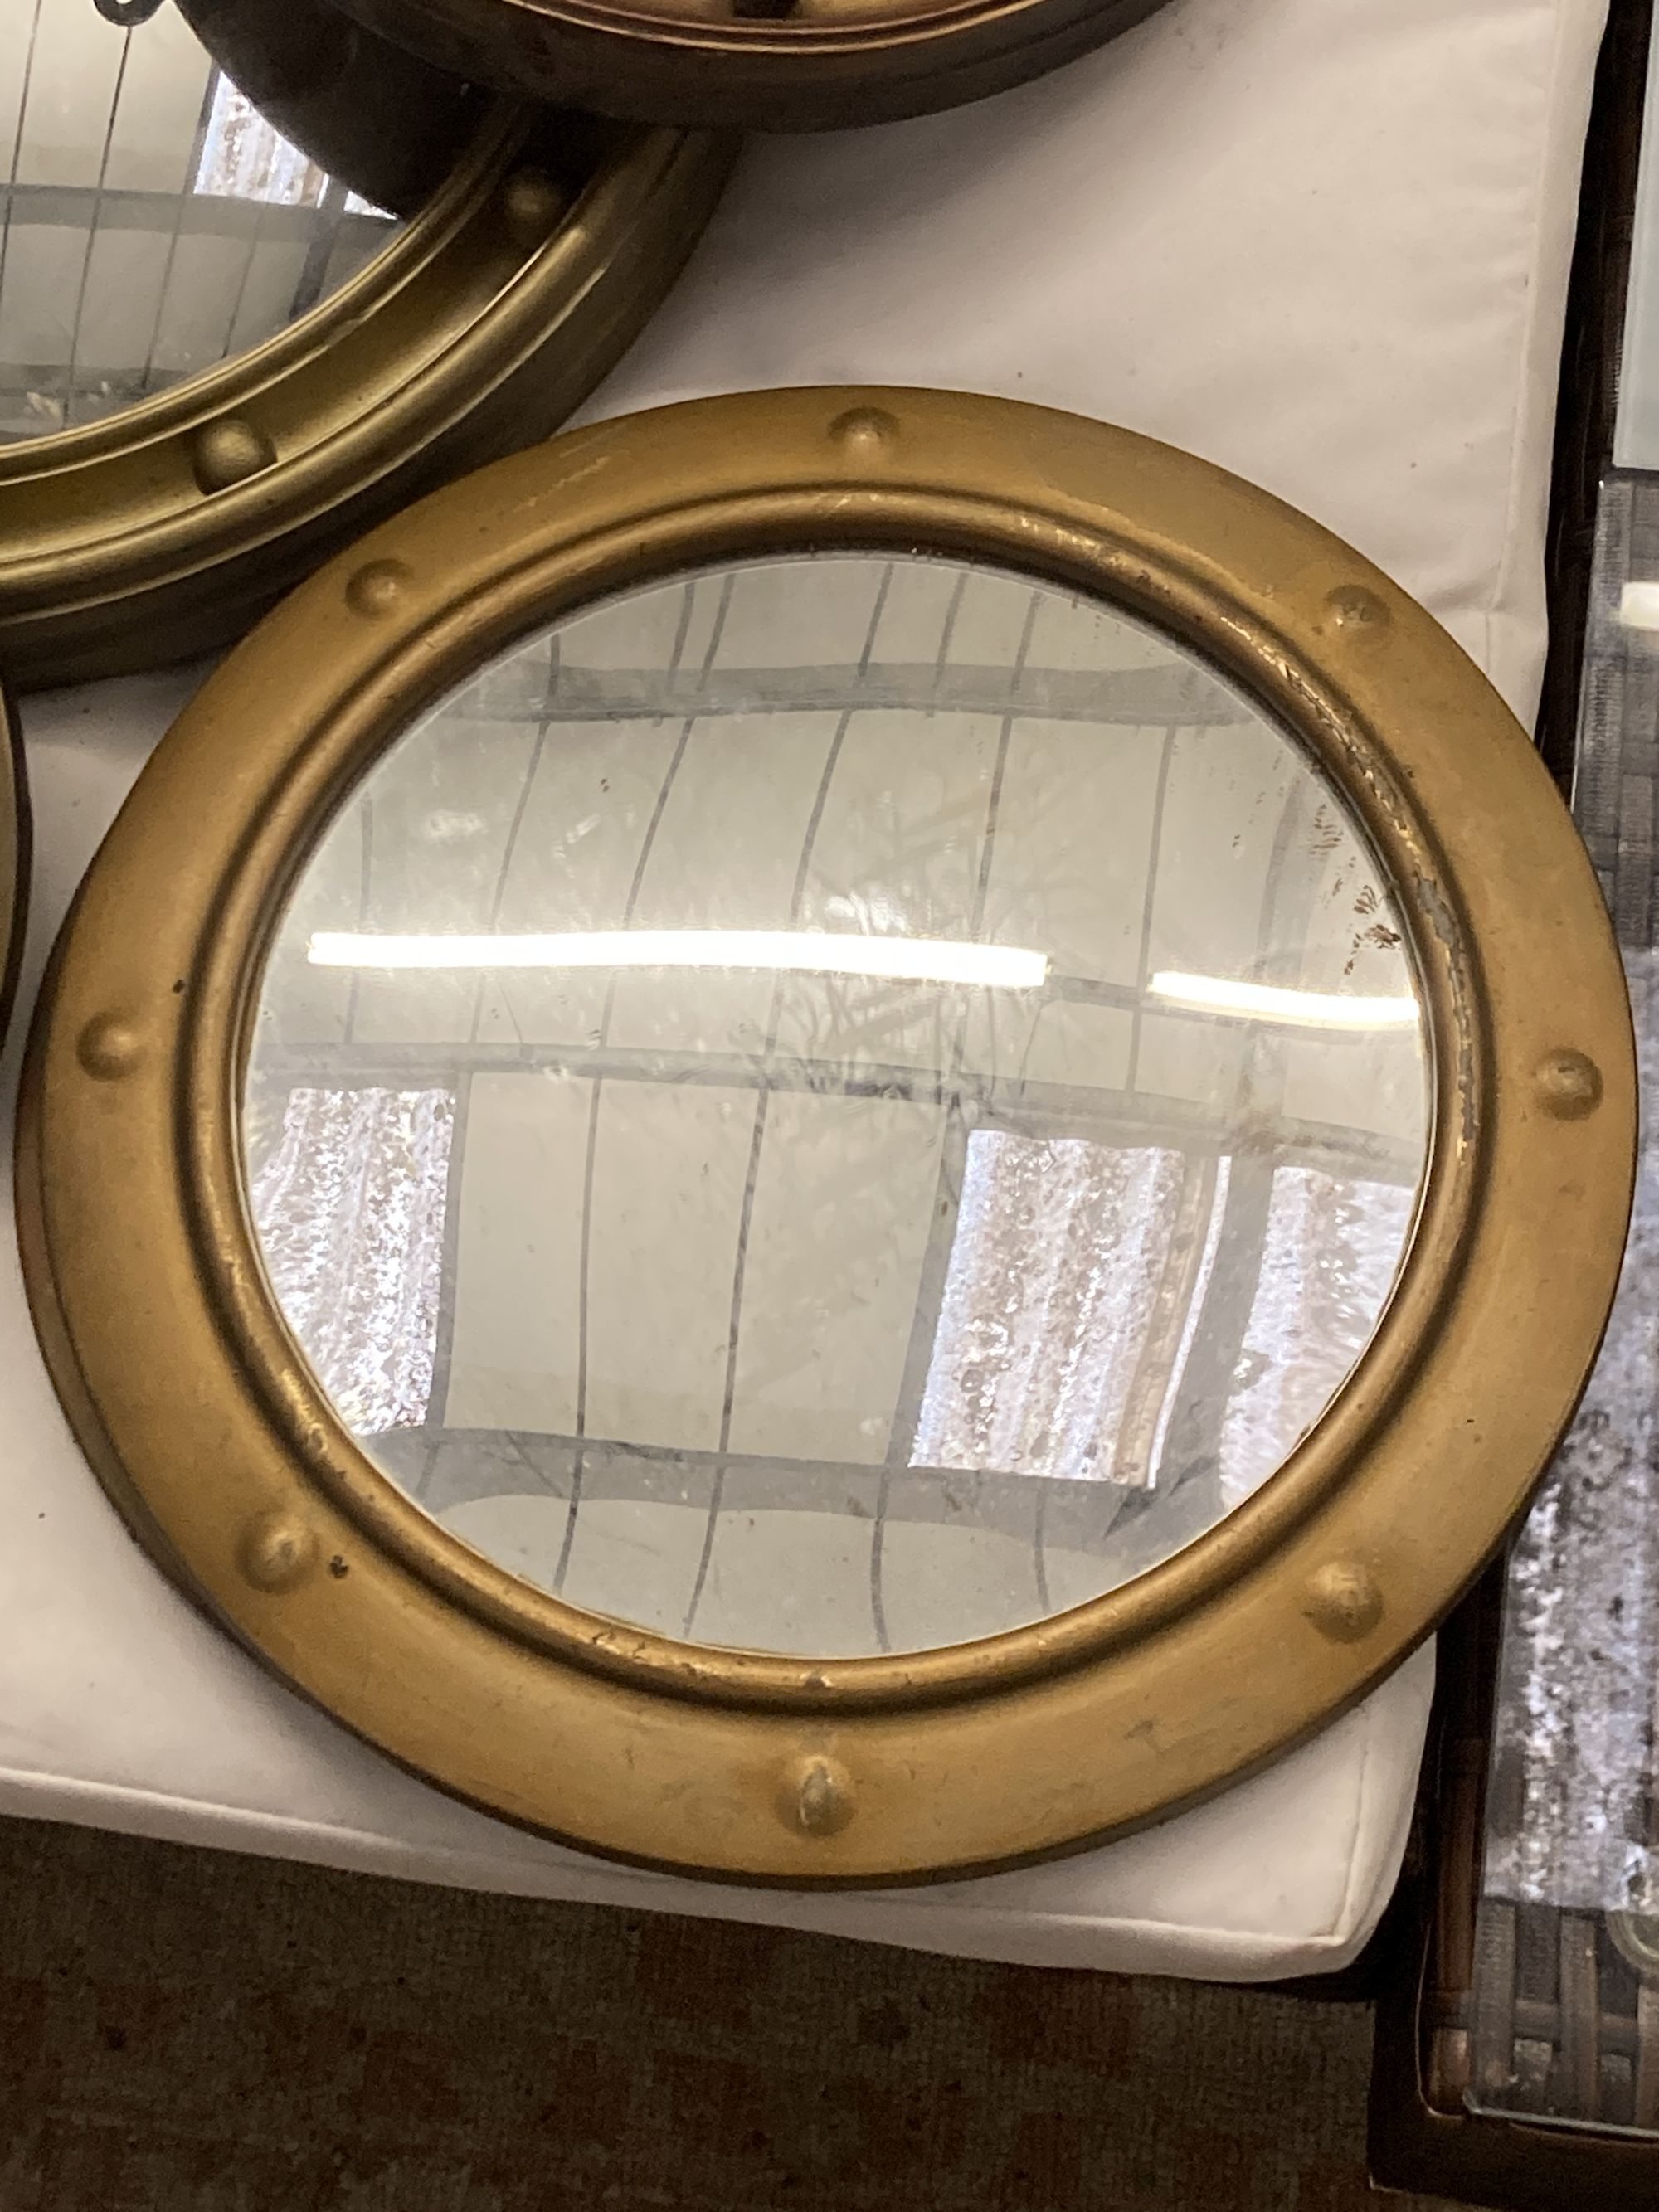 Six circular gilt and brass framed convex wall mirrors, largest 39cm diameter